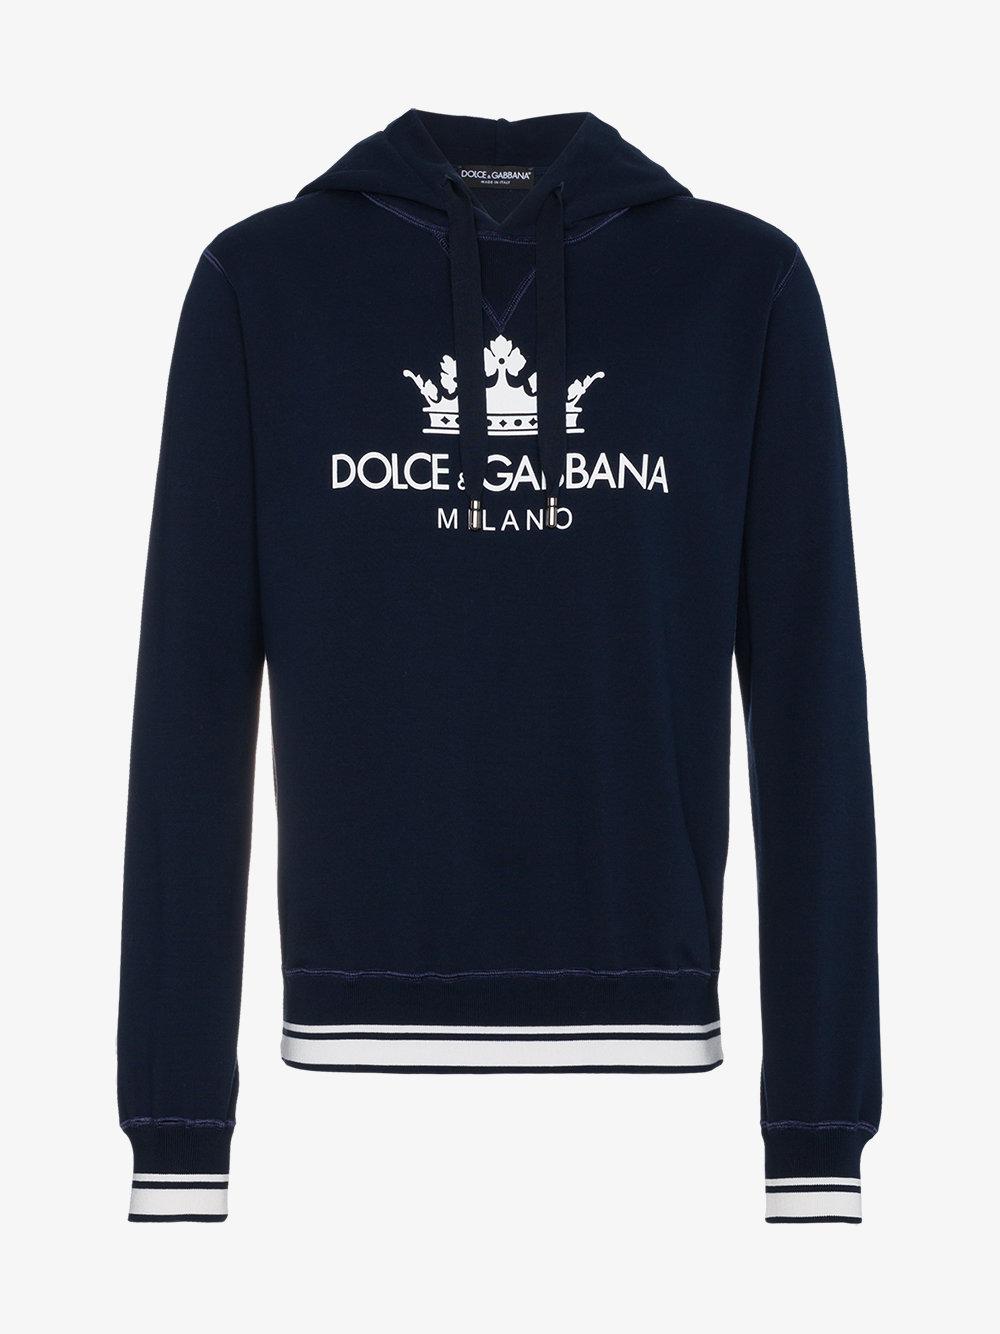 Dolce Gabbana Milano Hooded Sweatshirt in for | Lyst